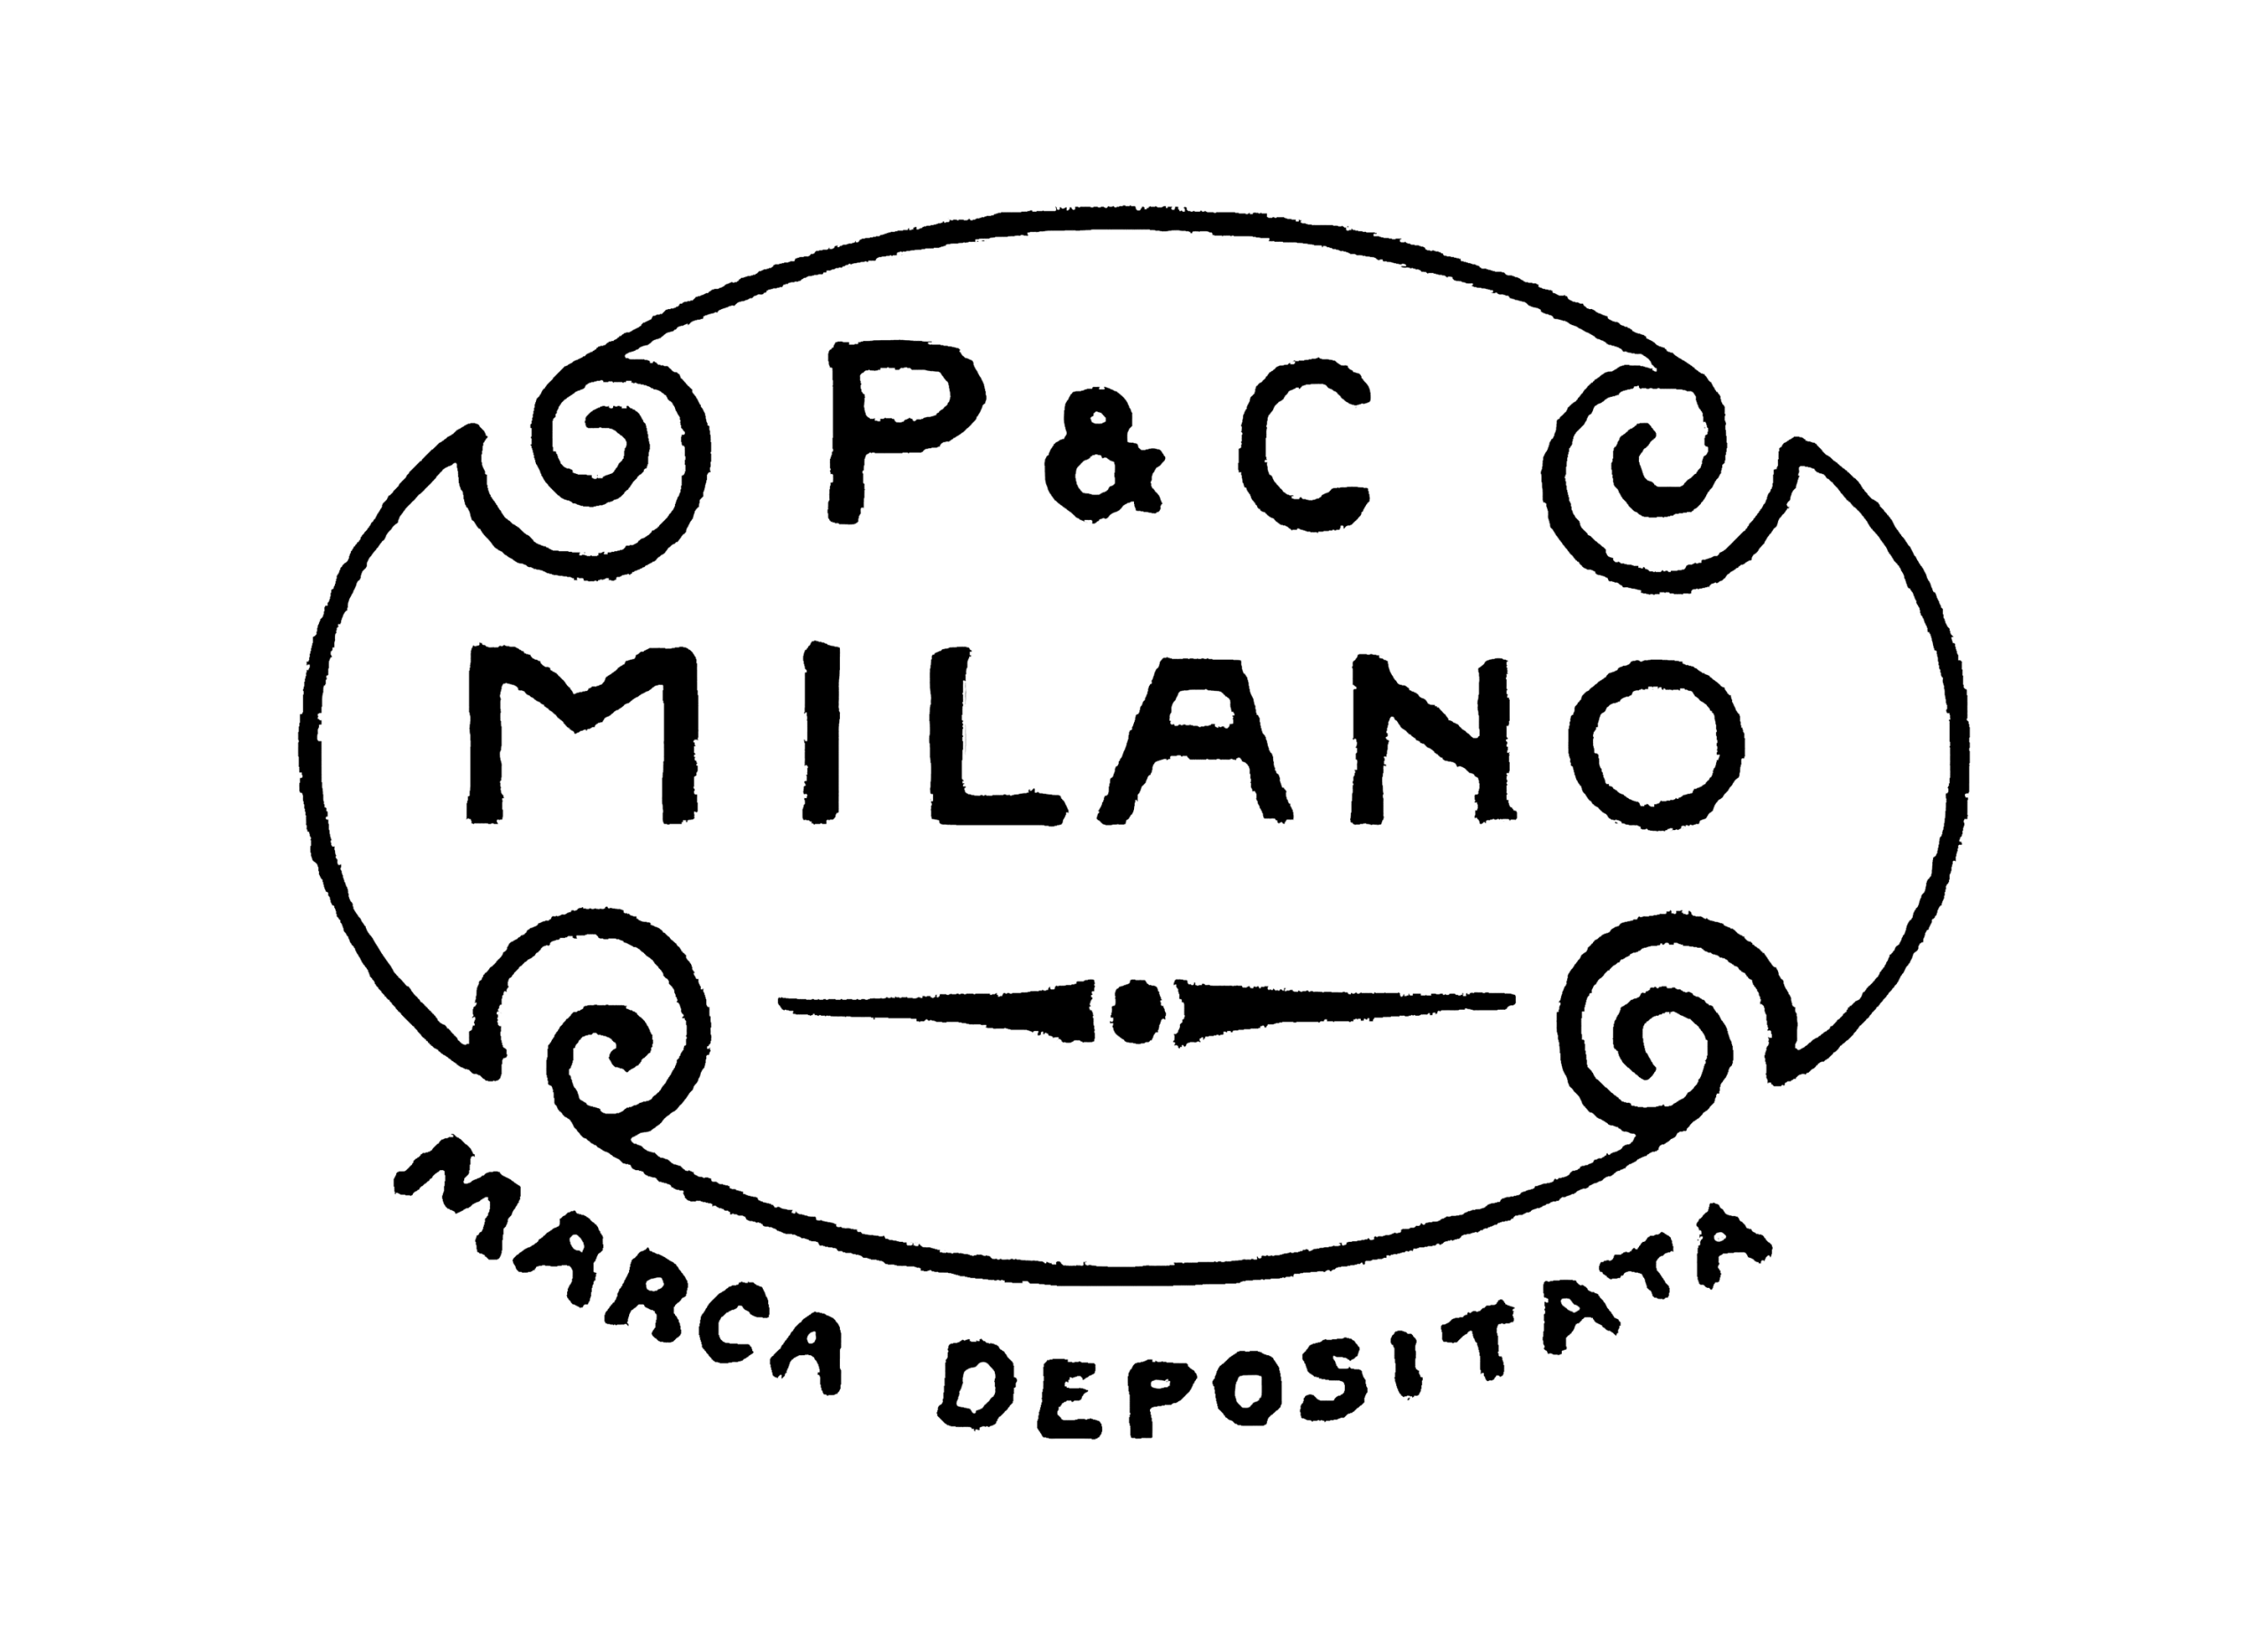 Pirelli logo 1901-1906